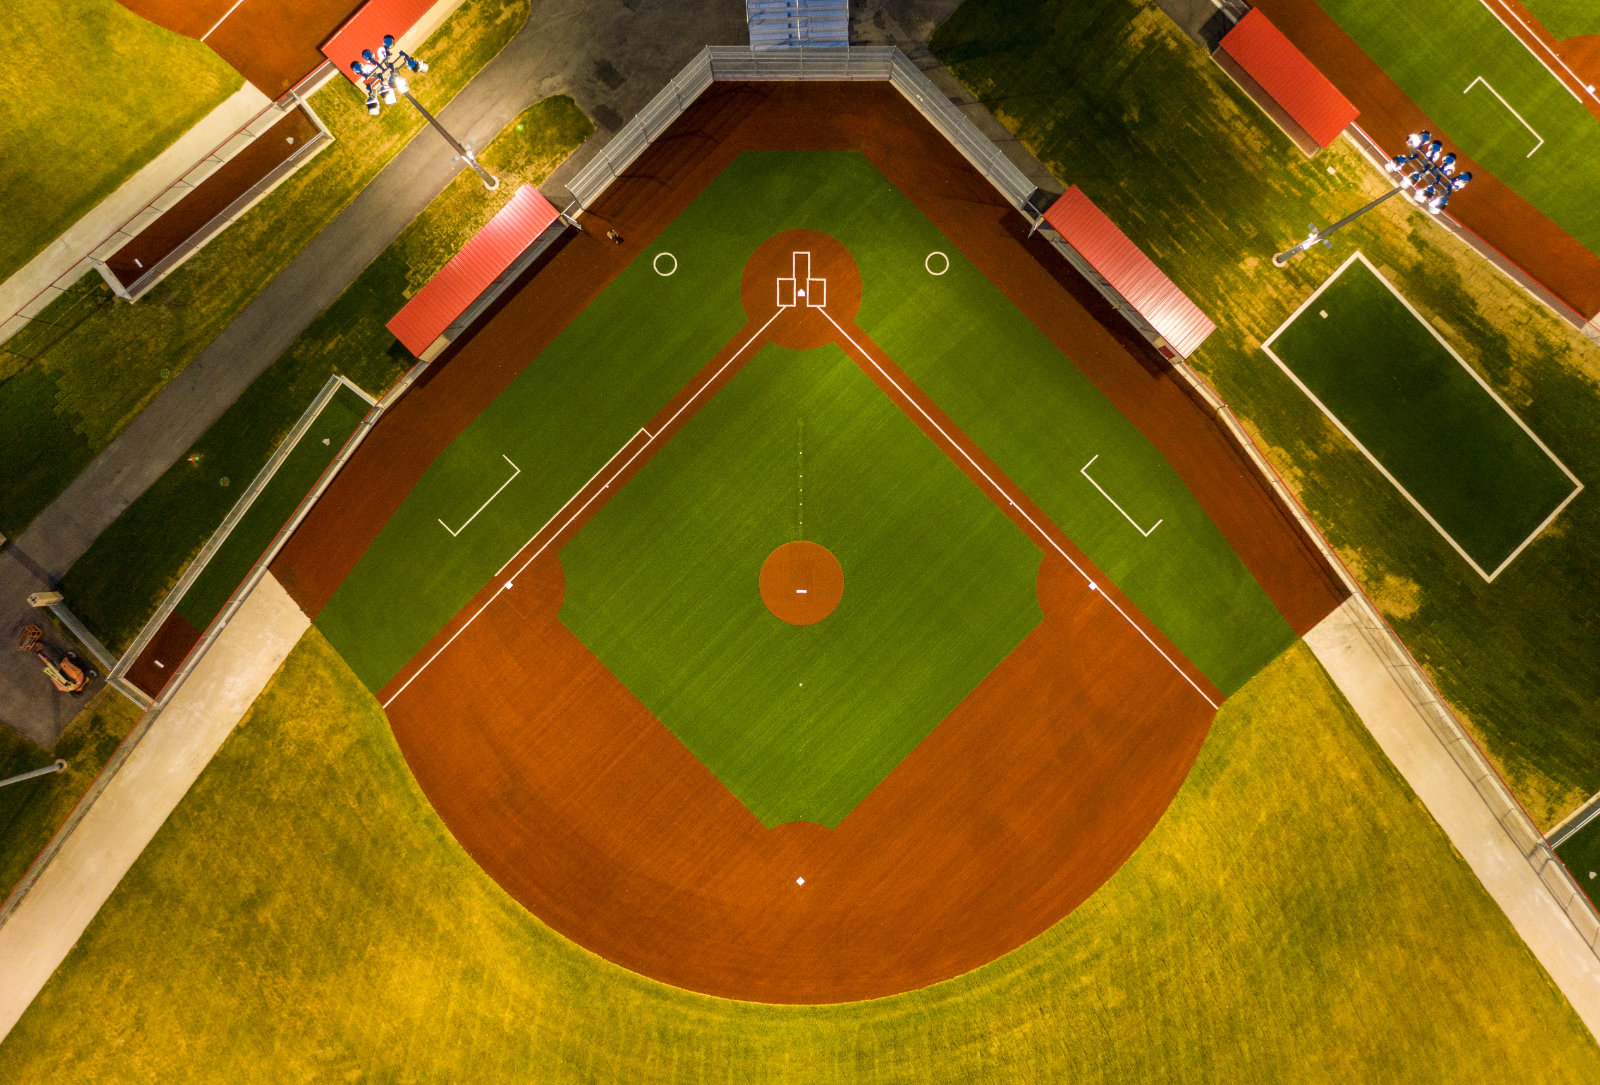 Baseball field at night